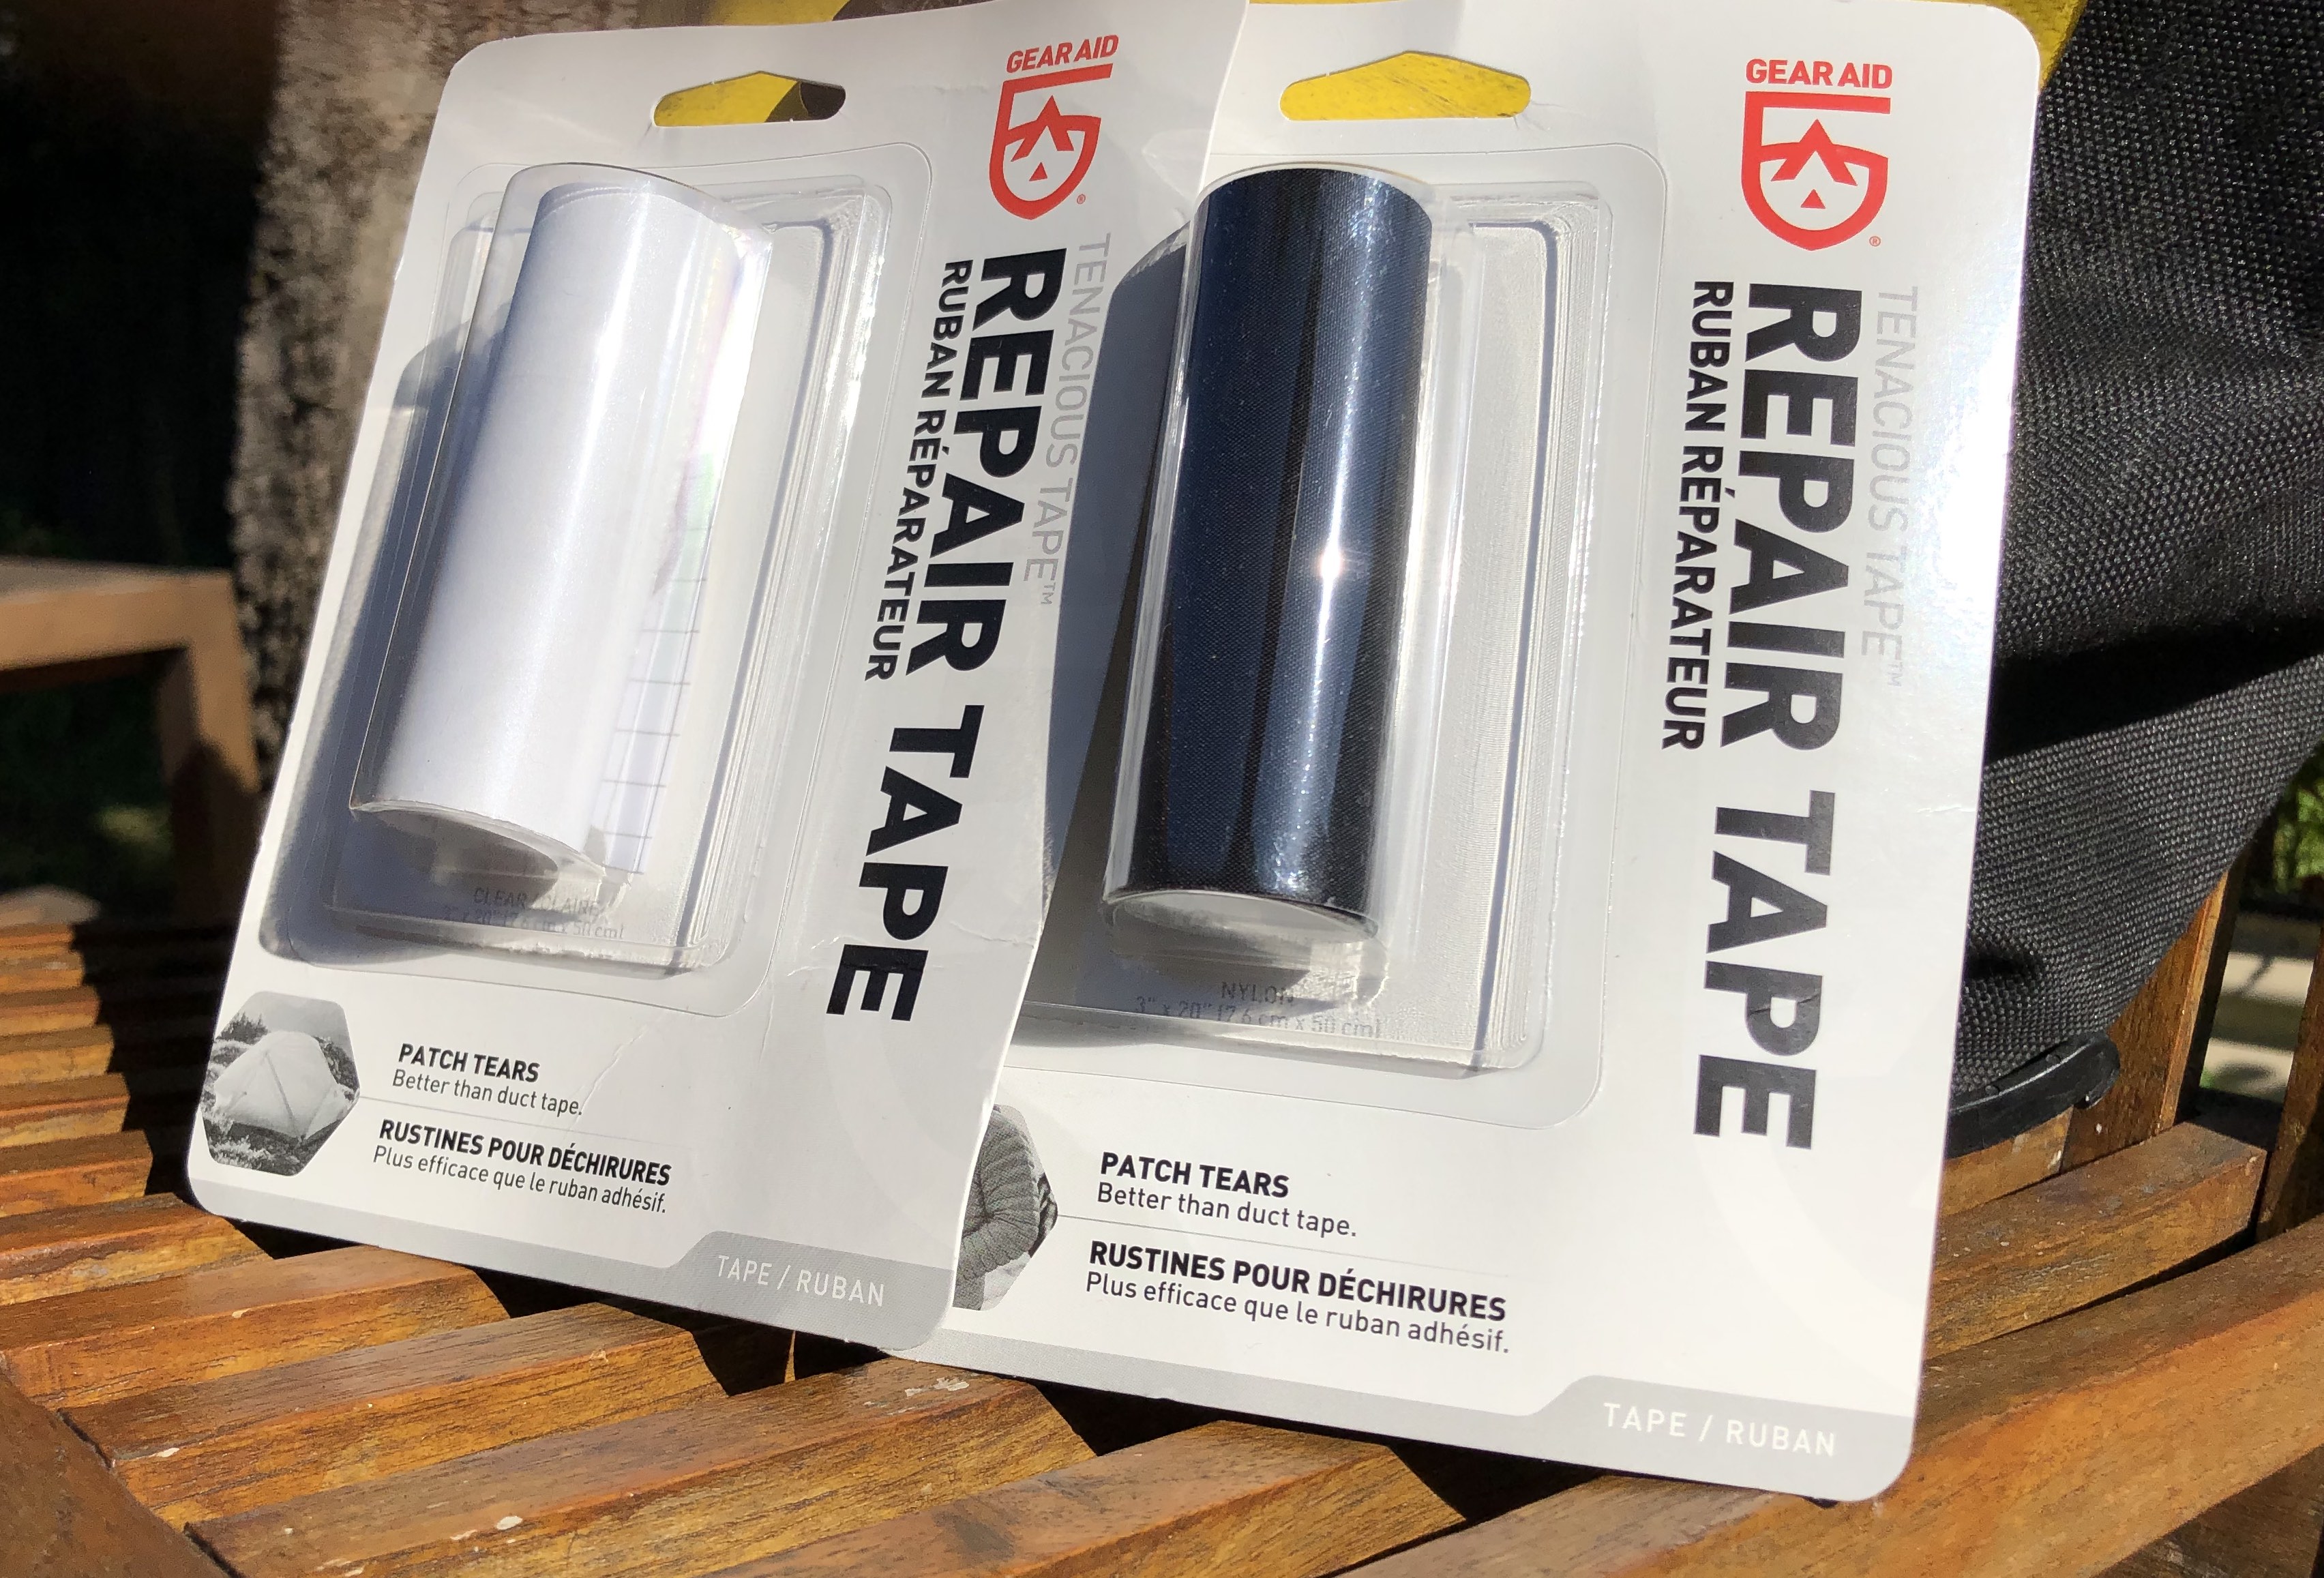 Gear Aid® Tenacious Tape, Outdoor Gear Repair Tape